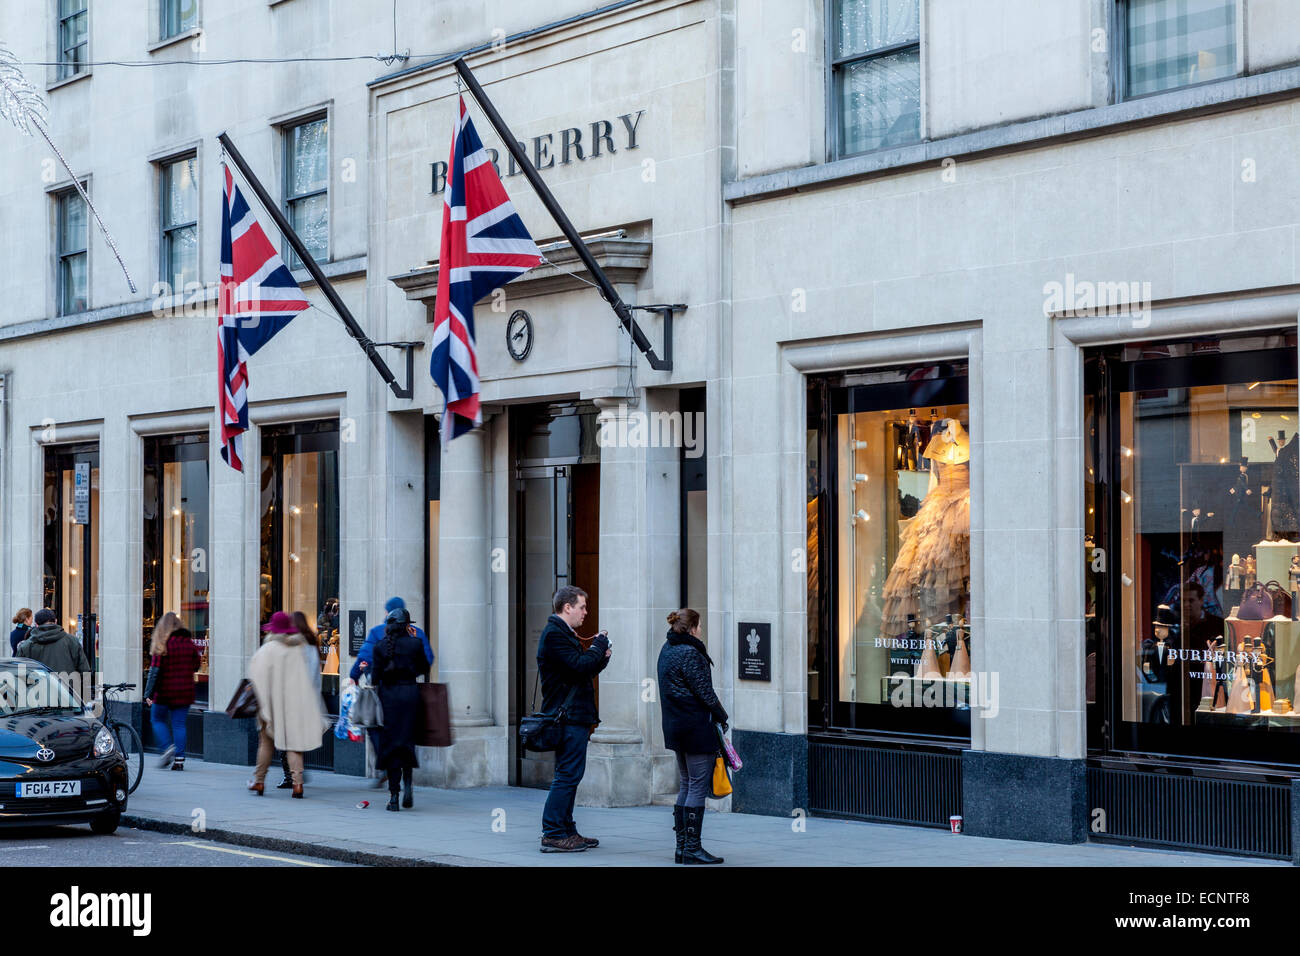 La Boutique Burberry à New Bond Street, Londres, Angleterre Photo Stock -  Alamy